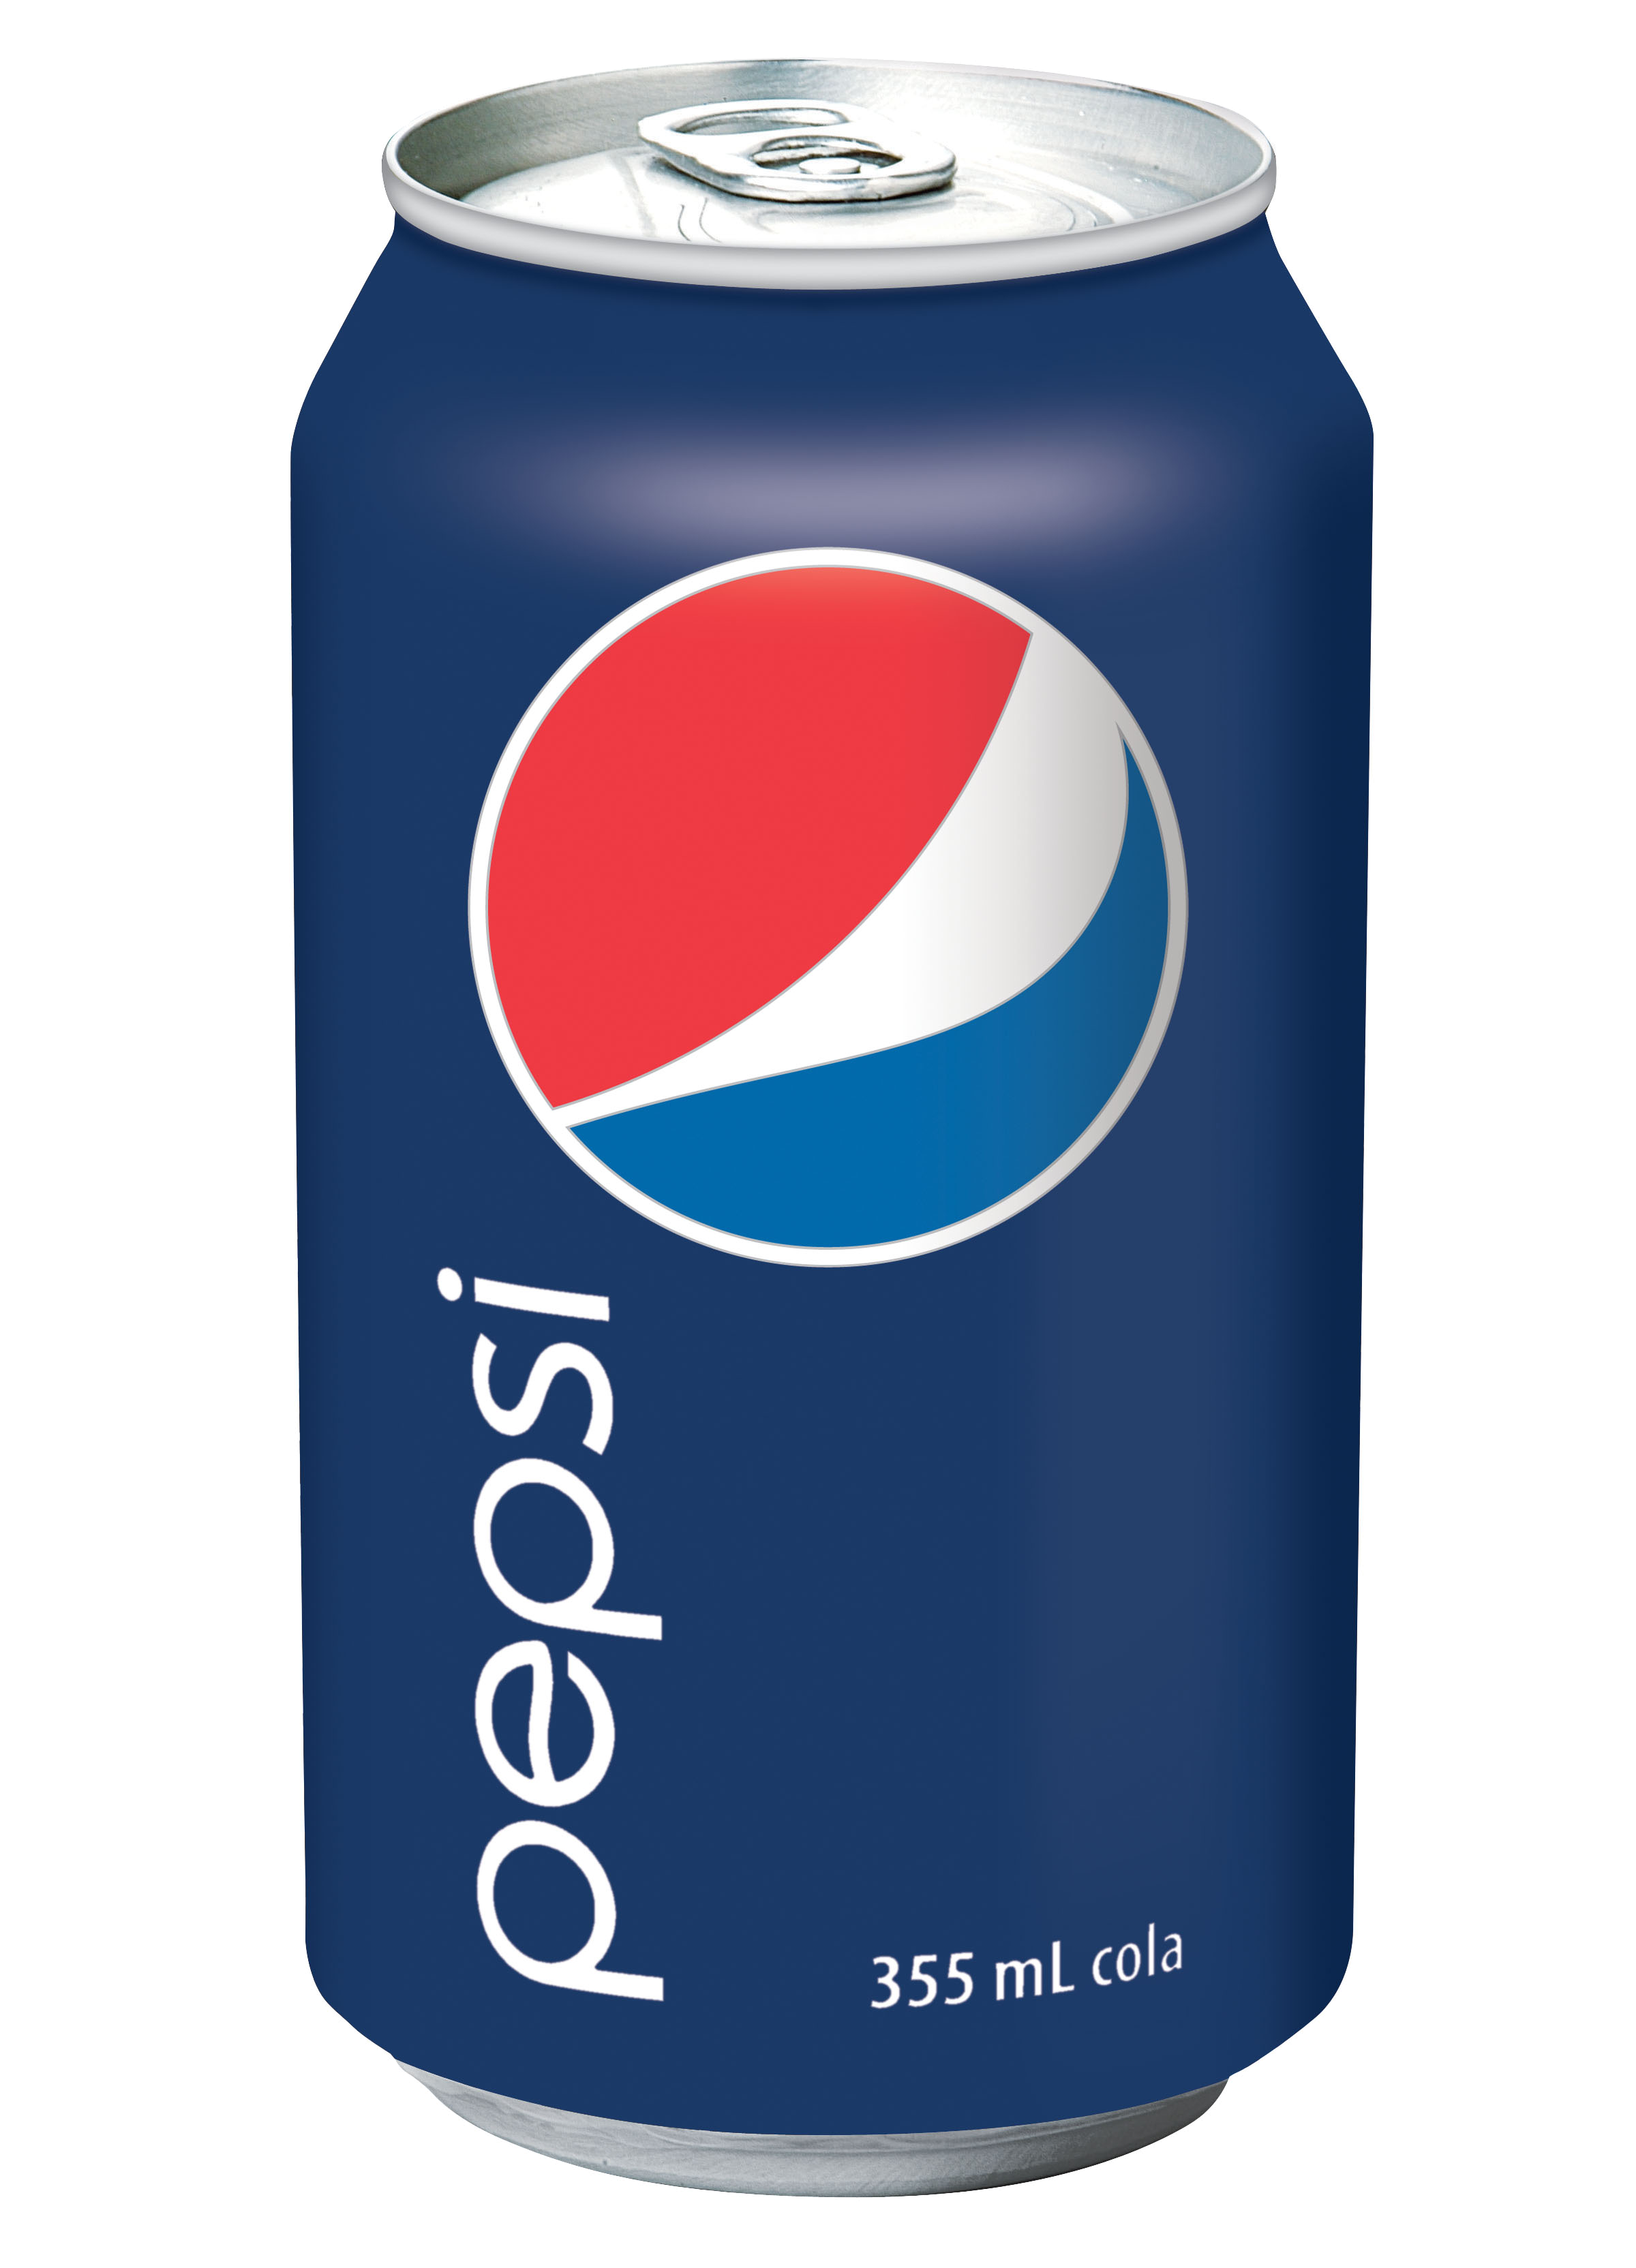 Pepsi bottle png. Download image come alive